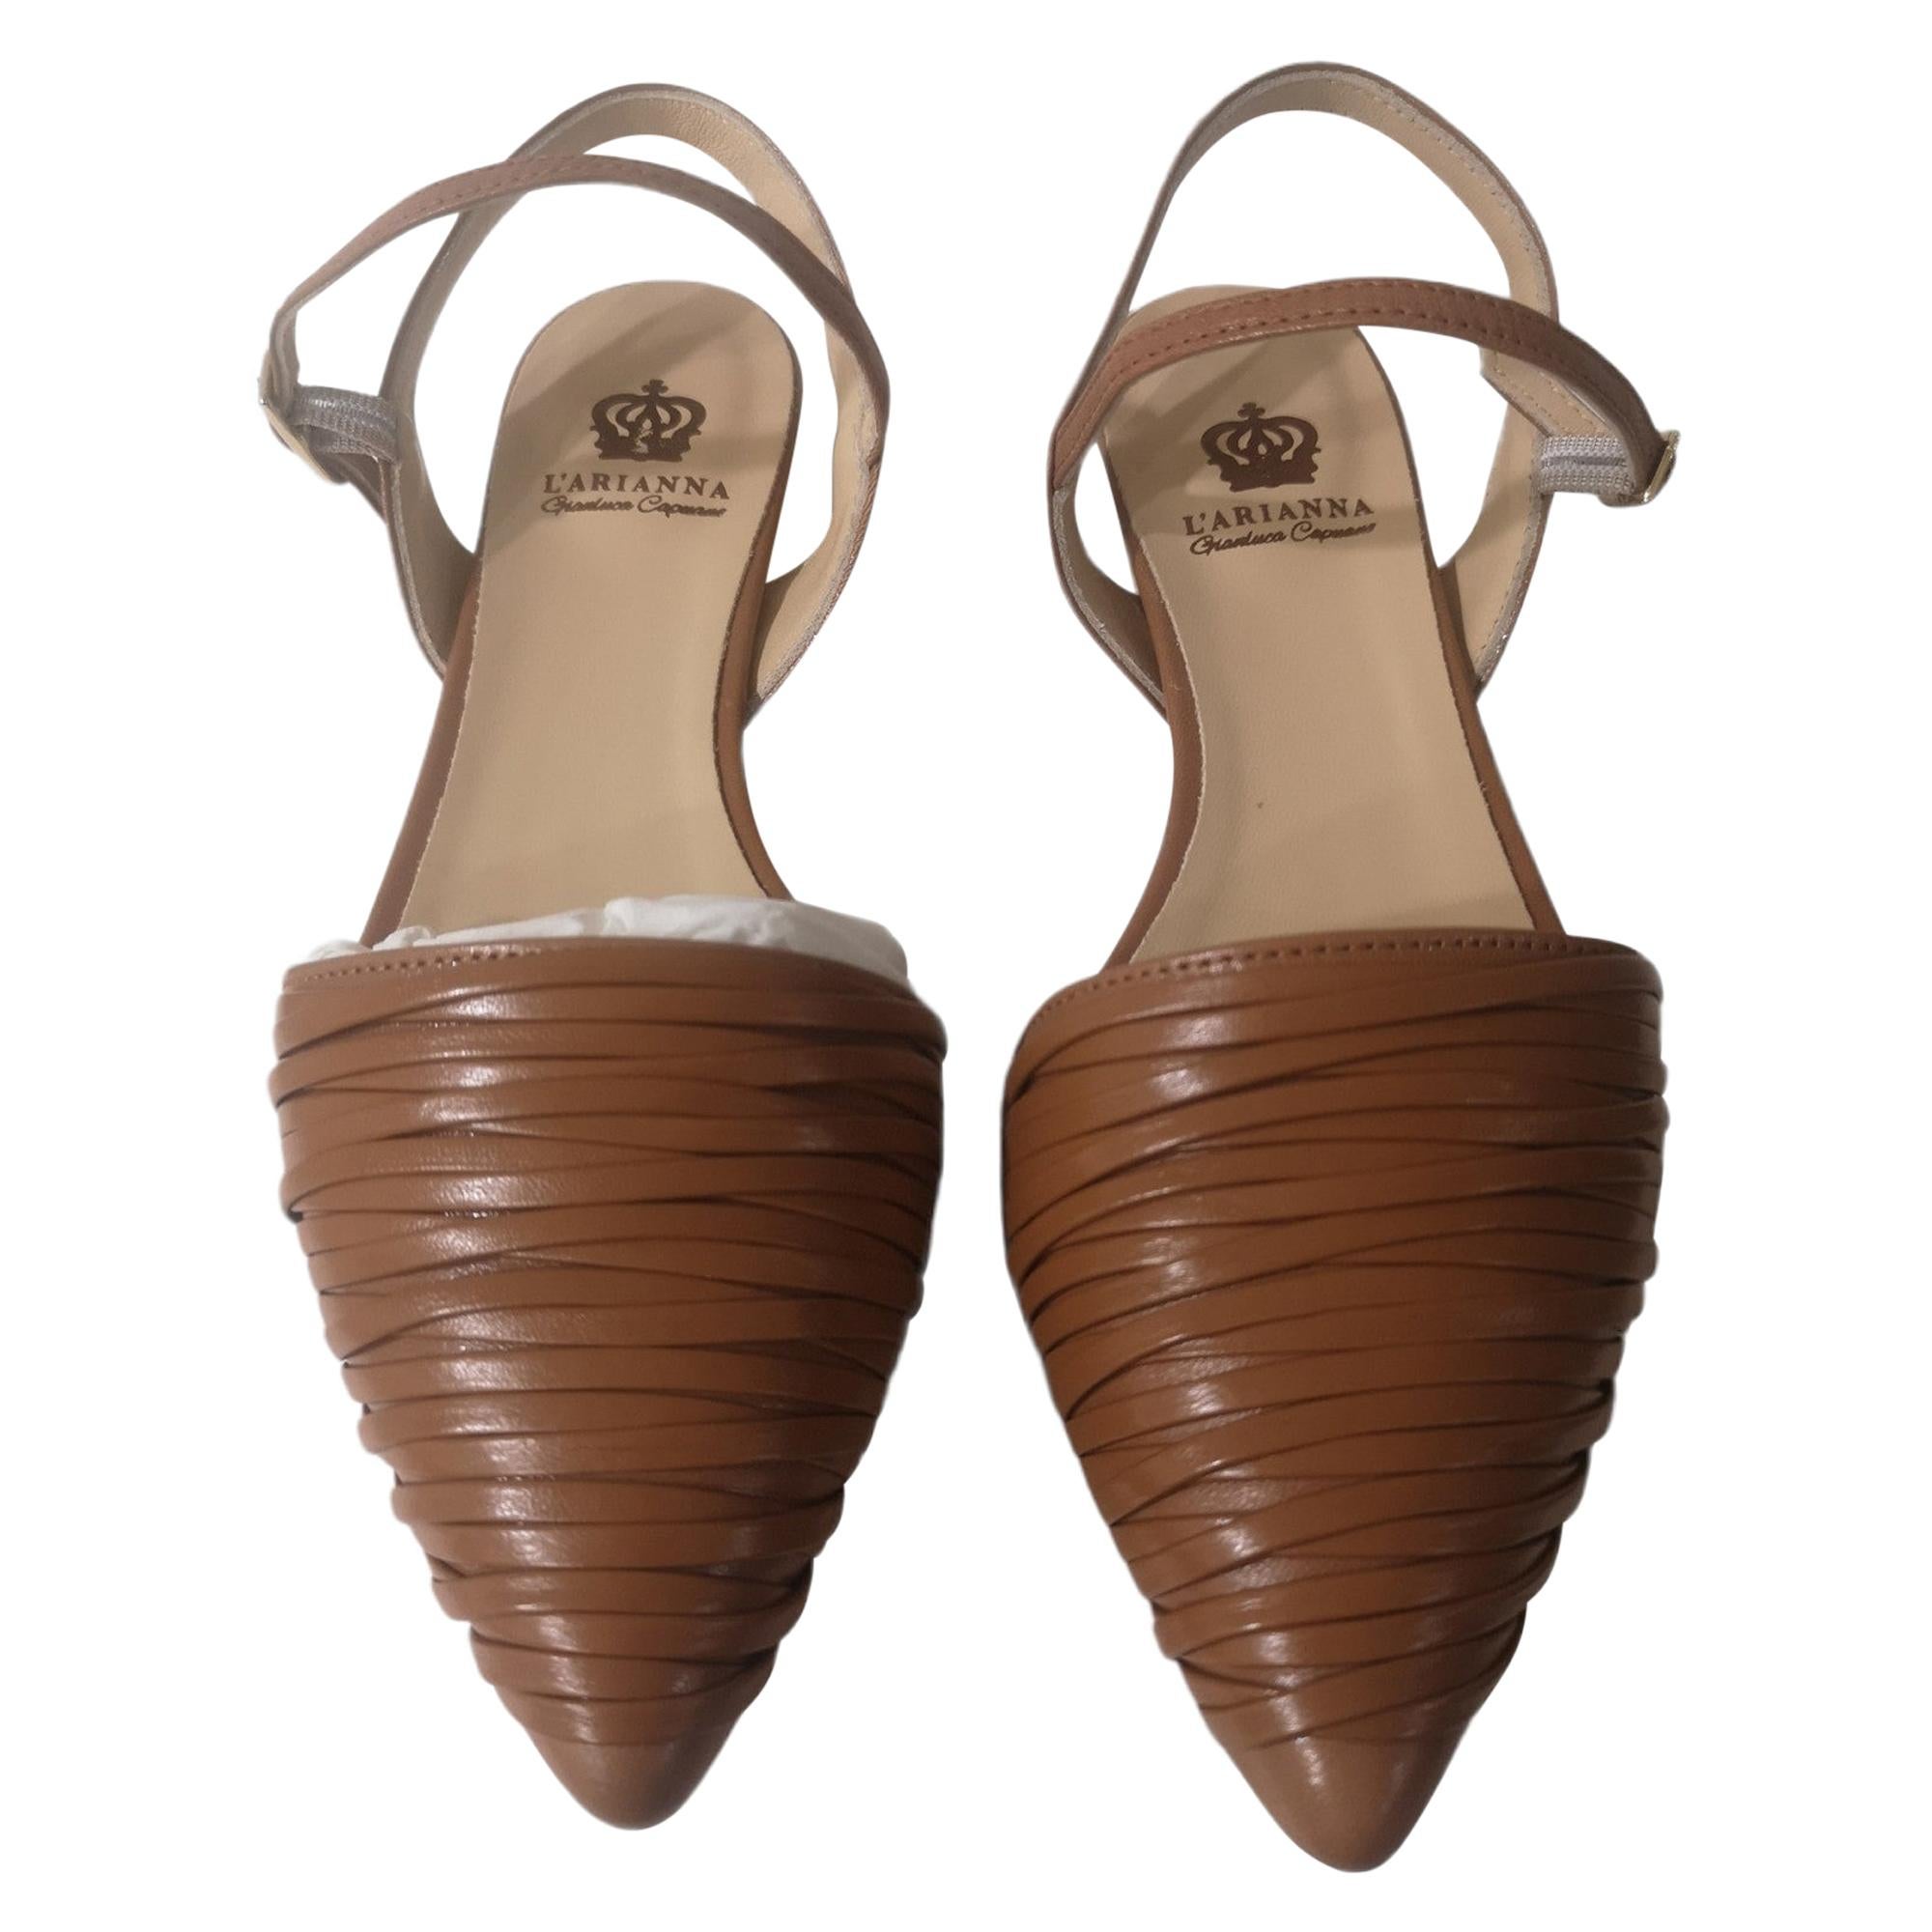 Handmade brown leather sandals - ballerinas